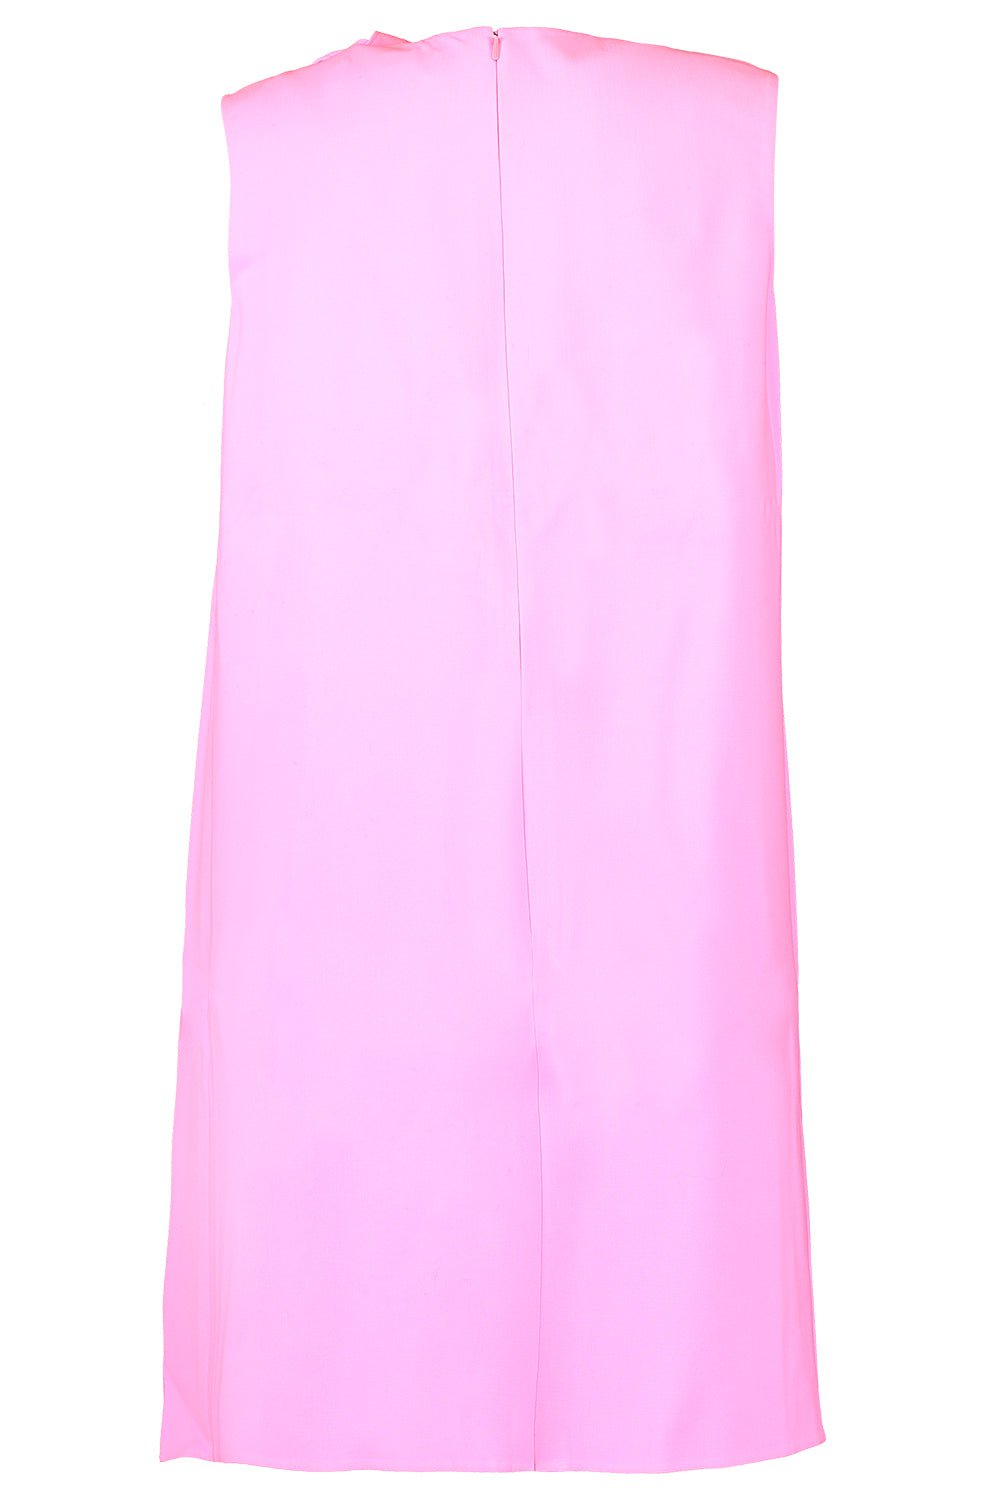 OSCAR DE LA RENTA-Bow-Embellished Crepe Mini Dress-PINK